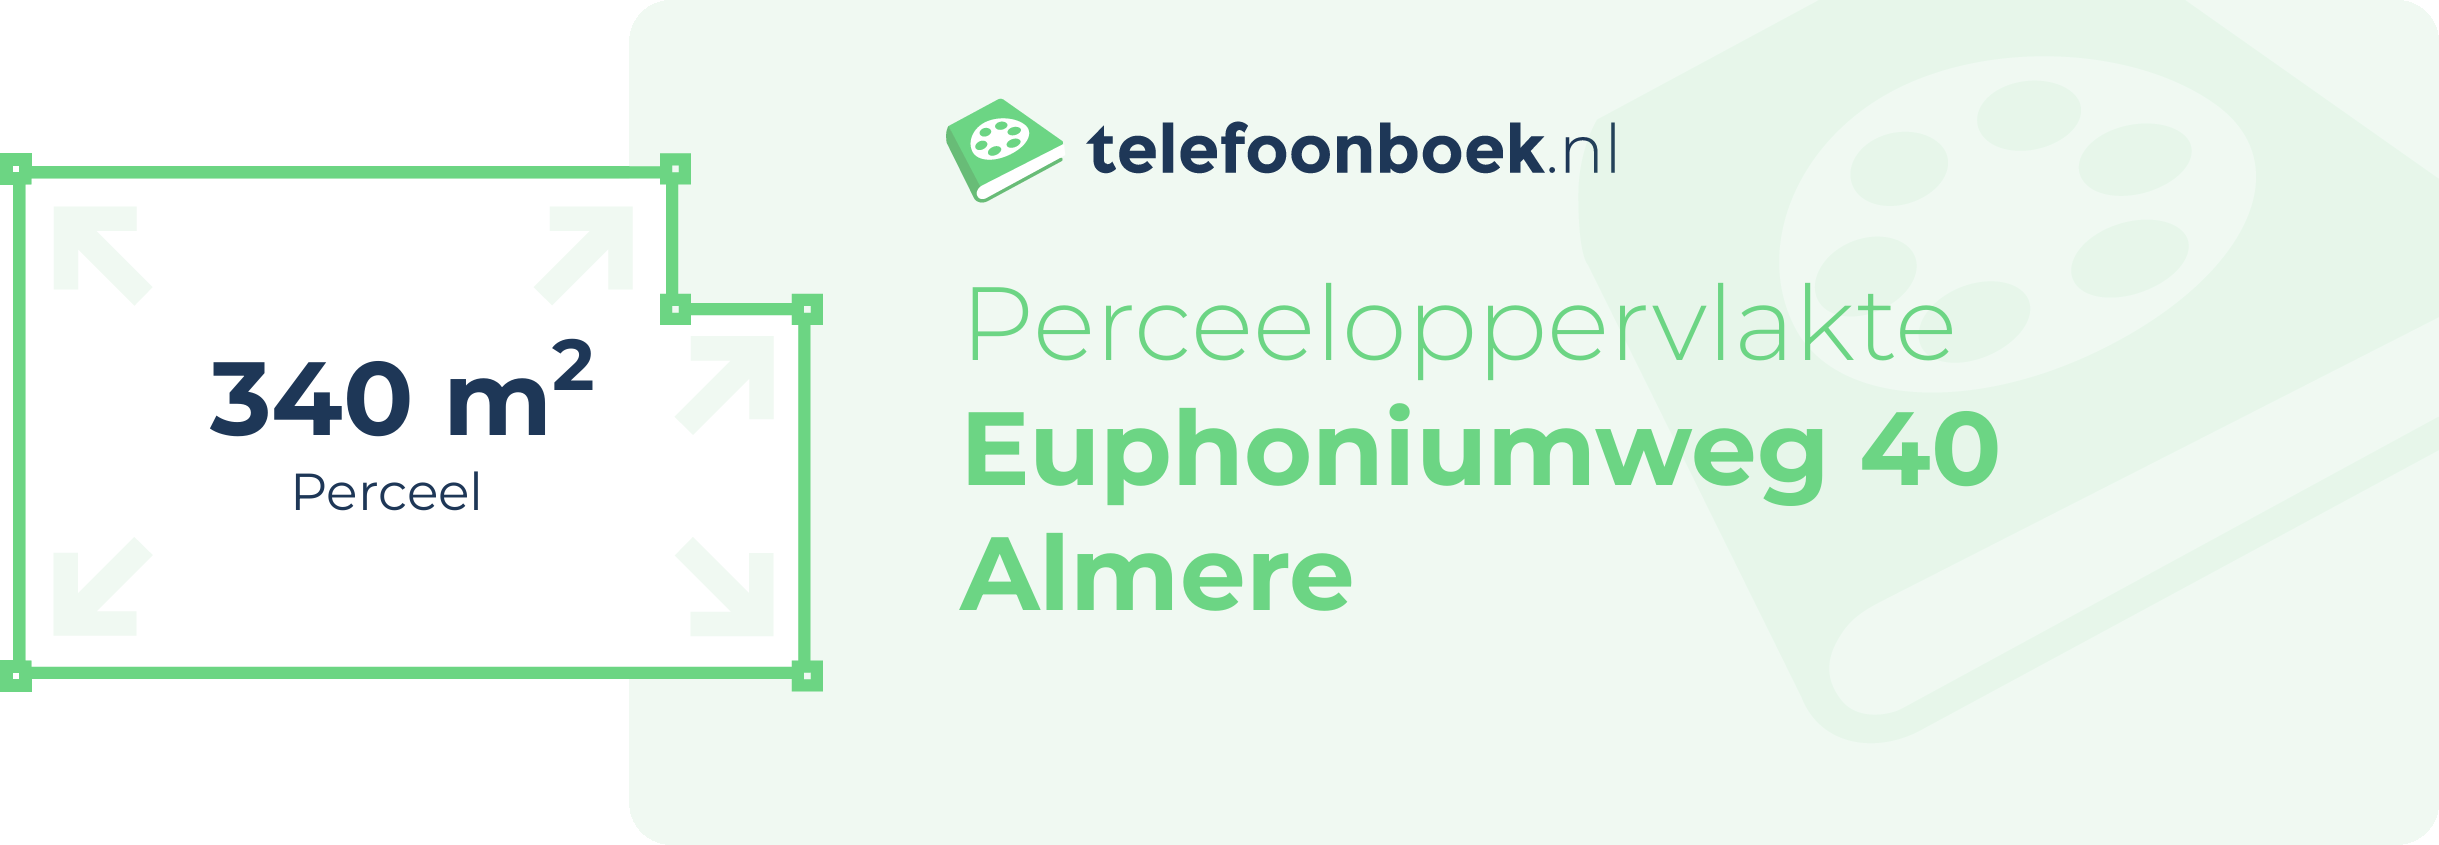 Perceeloppervlakte Euphoniumweg 40 Almere